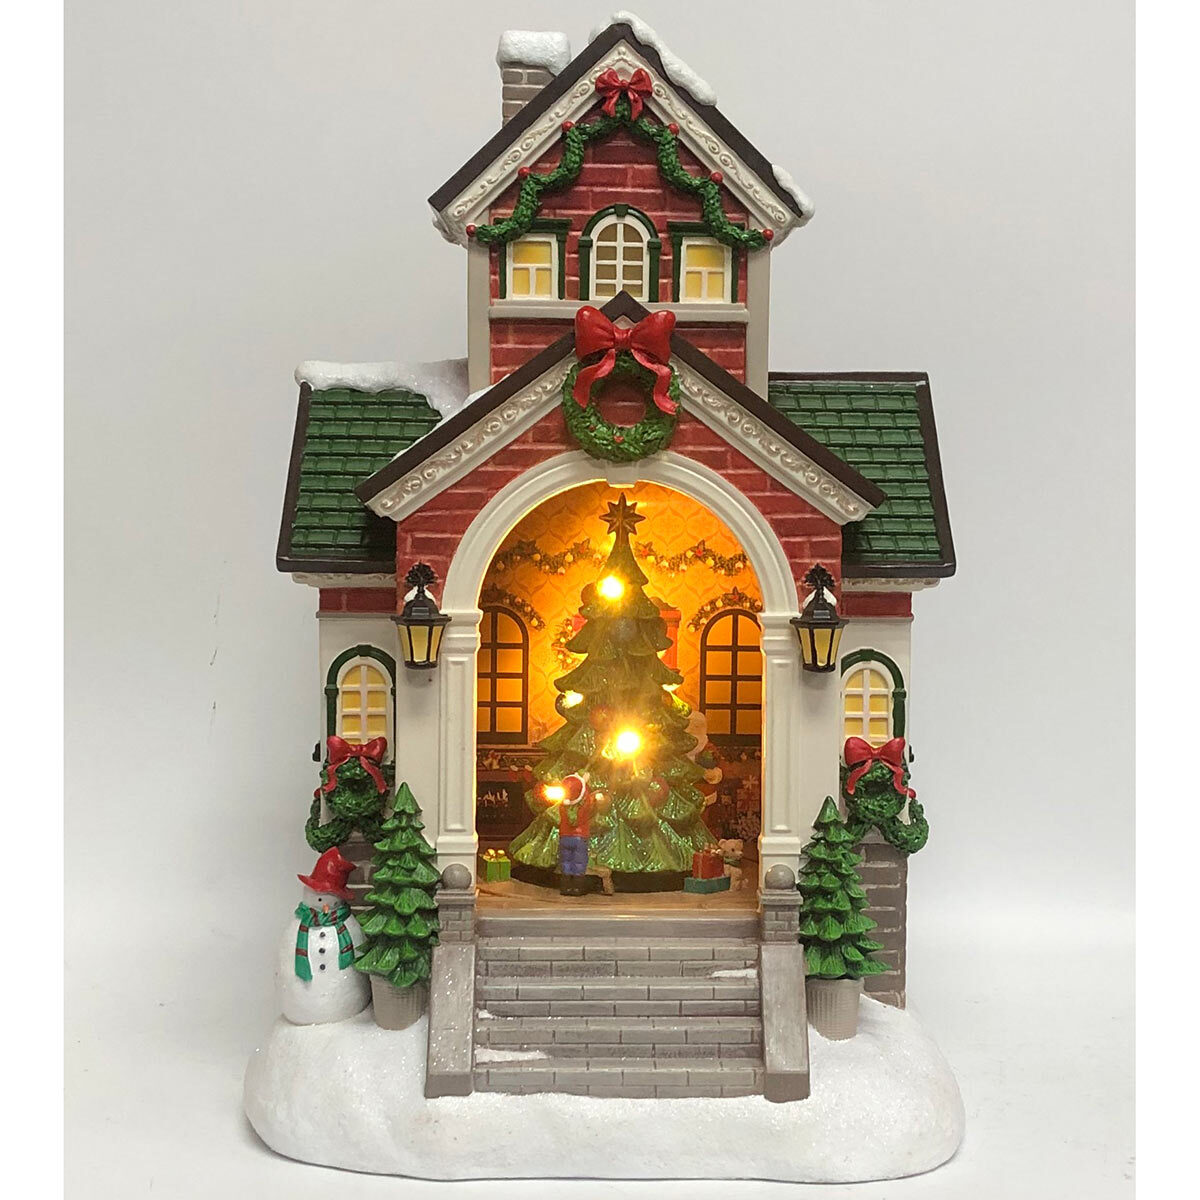 Buy Santa House Light Image at Costco.co.uk